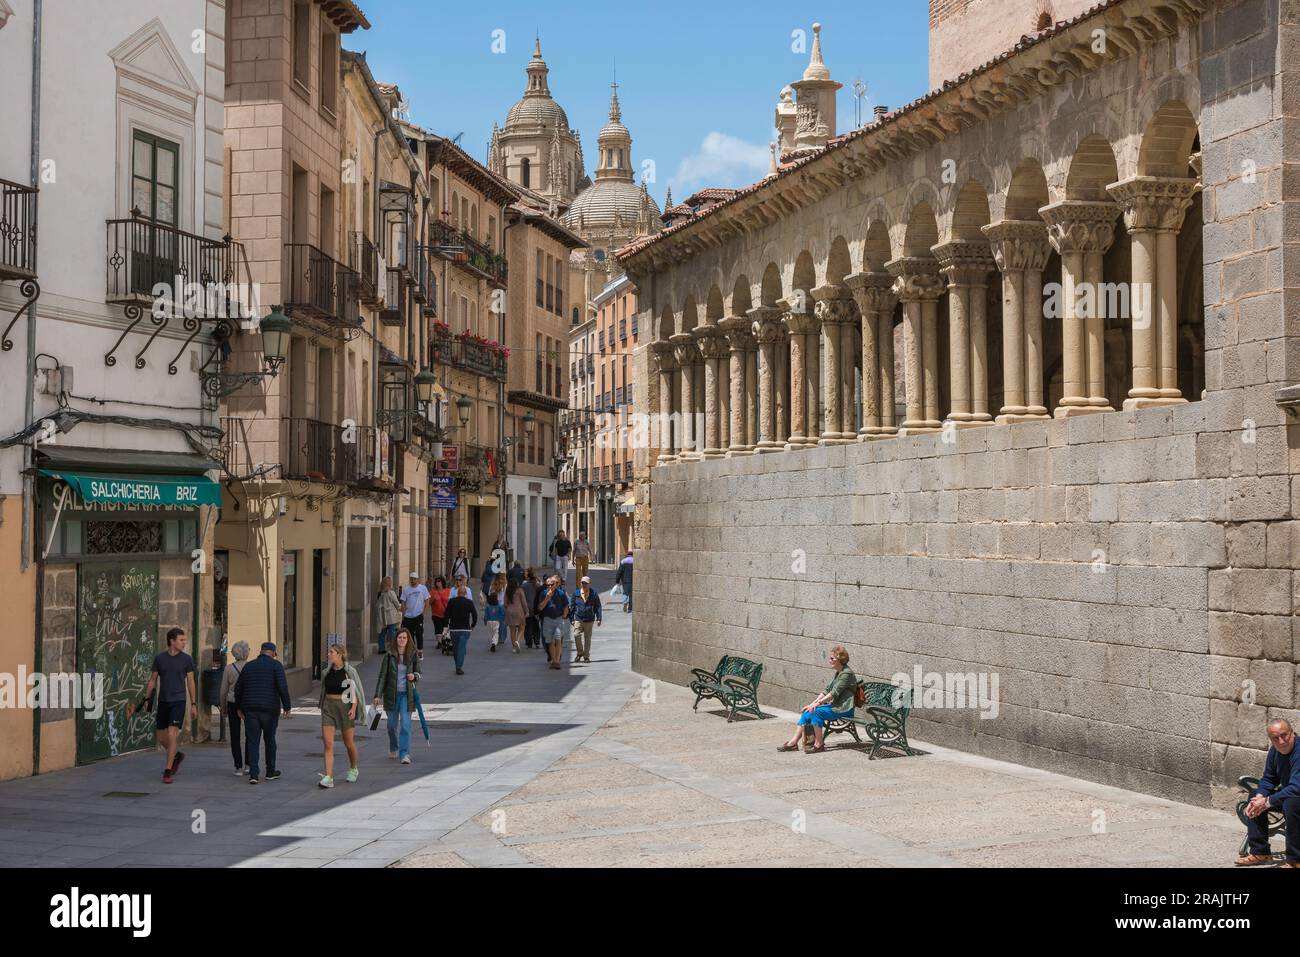 Segovia Old Town, view of the Calle Juan Bravo - the main thoroughfare of Segovia Old Town - showing the Romanesque wall of Iglesia San Martin (right) Stock Photo